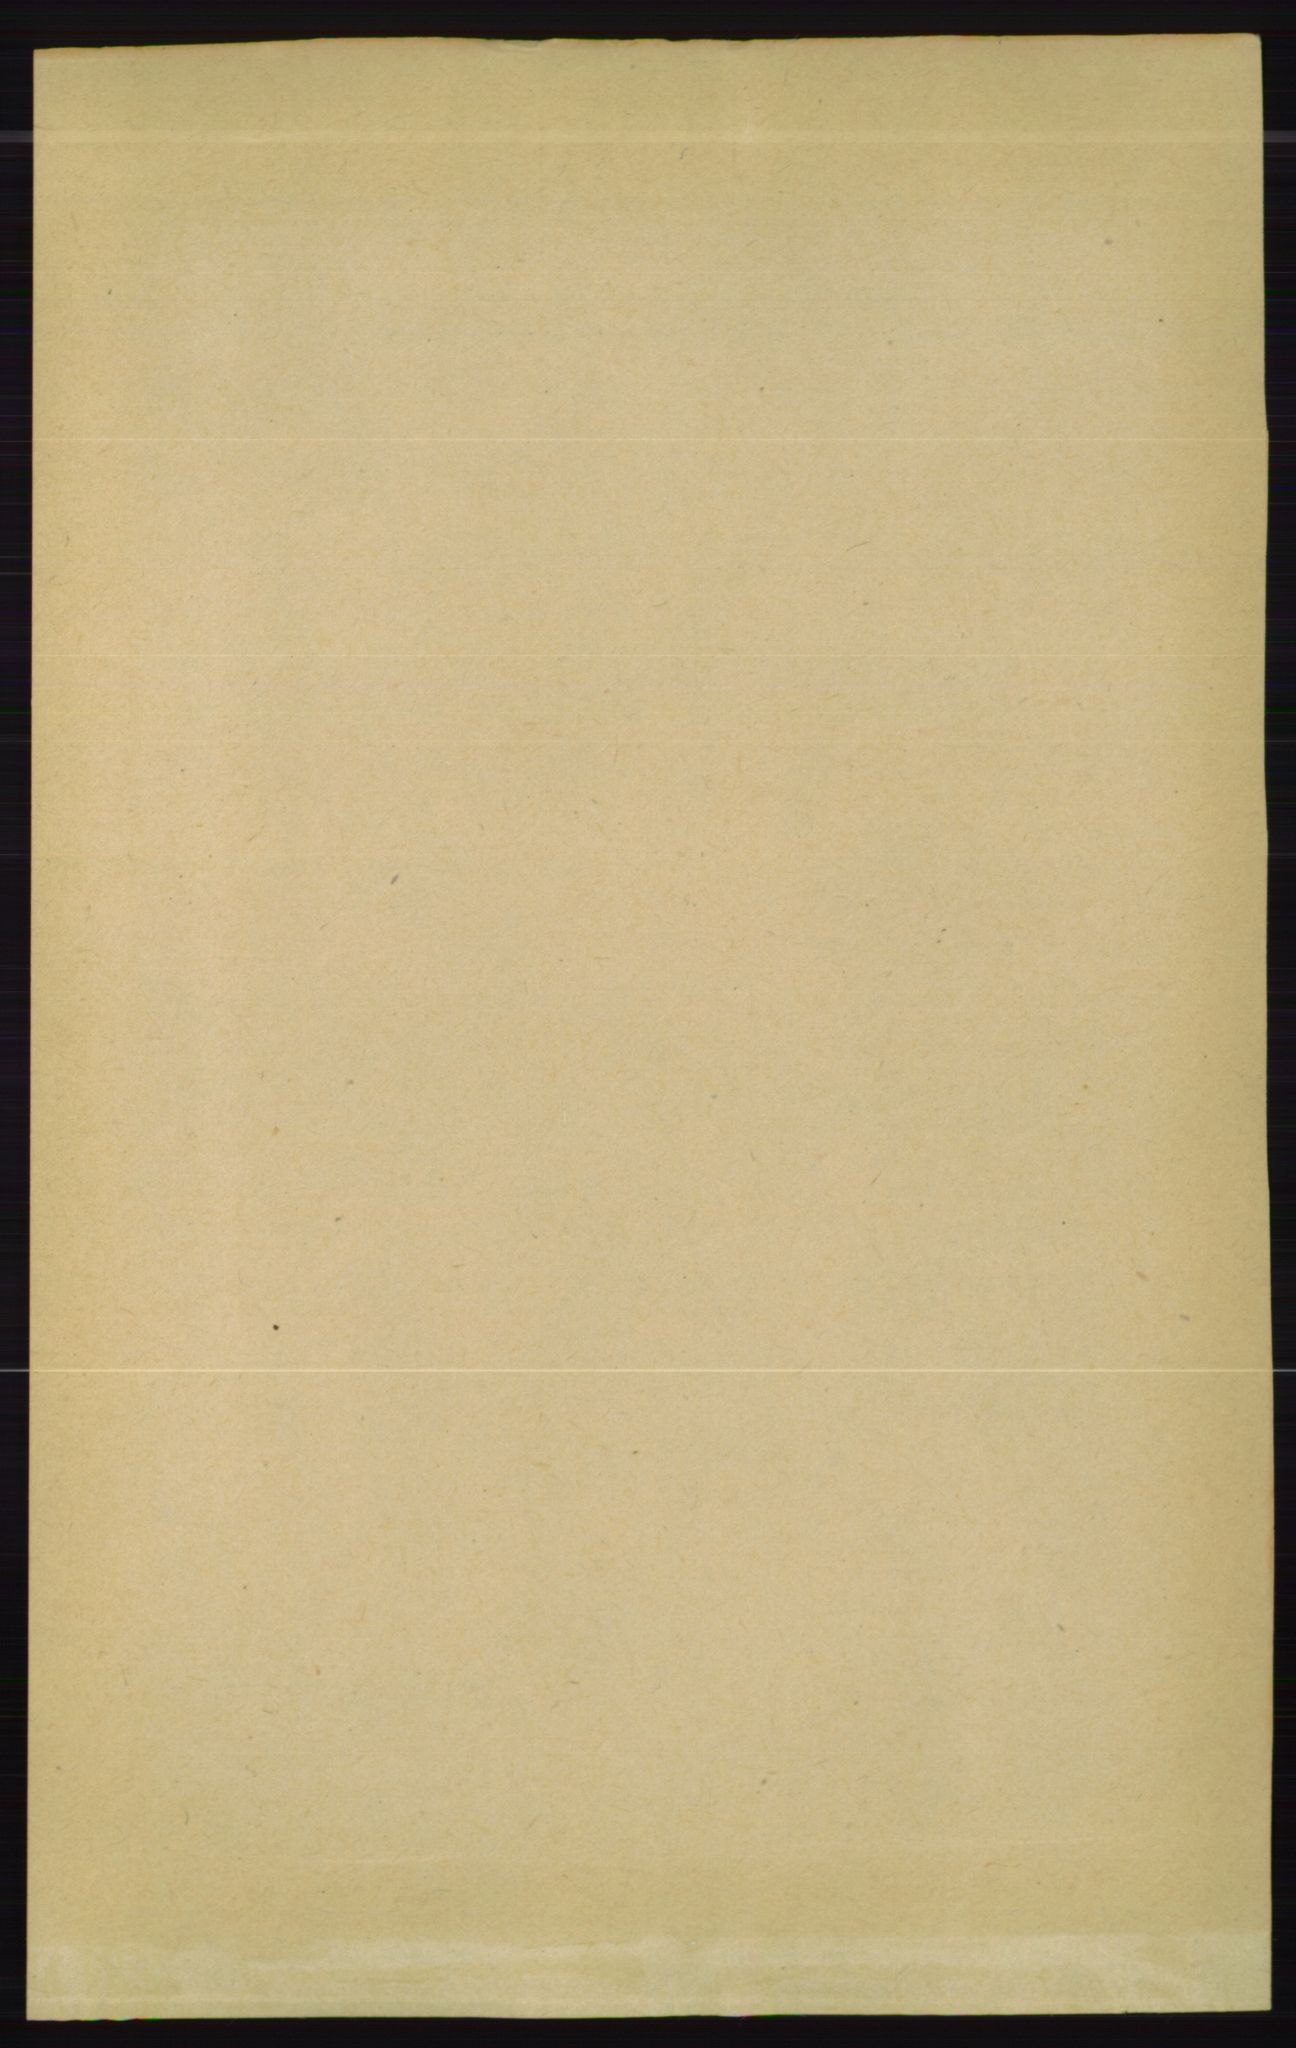 RA, Folketelling 1891 for 0822 Sauherad herred, 1891, s. 98